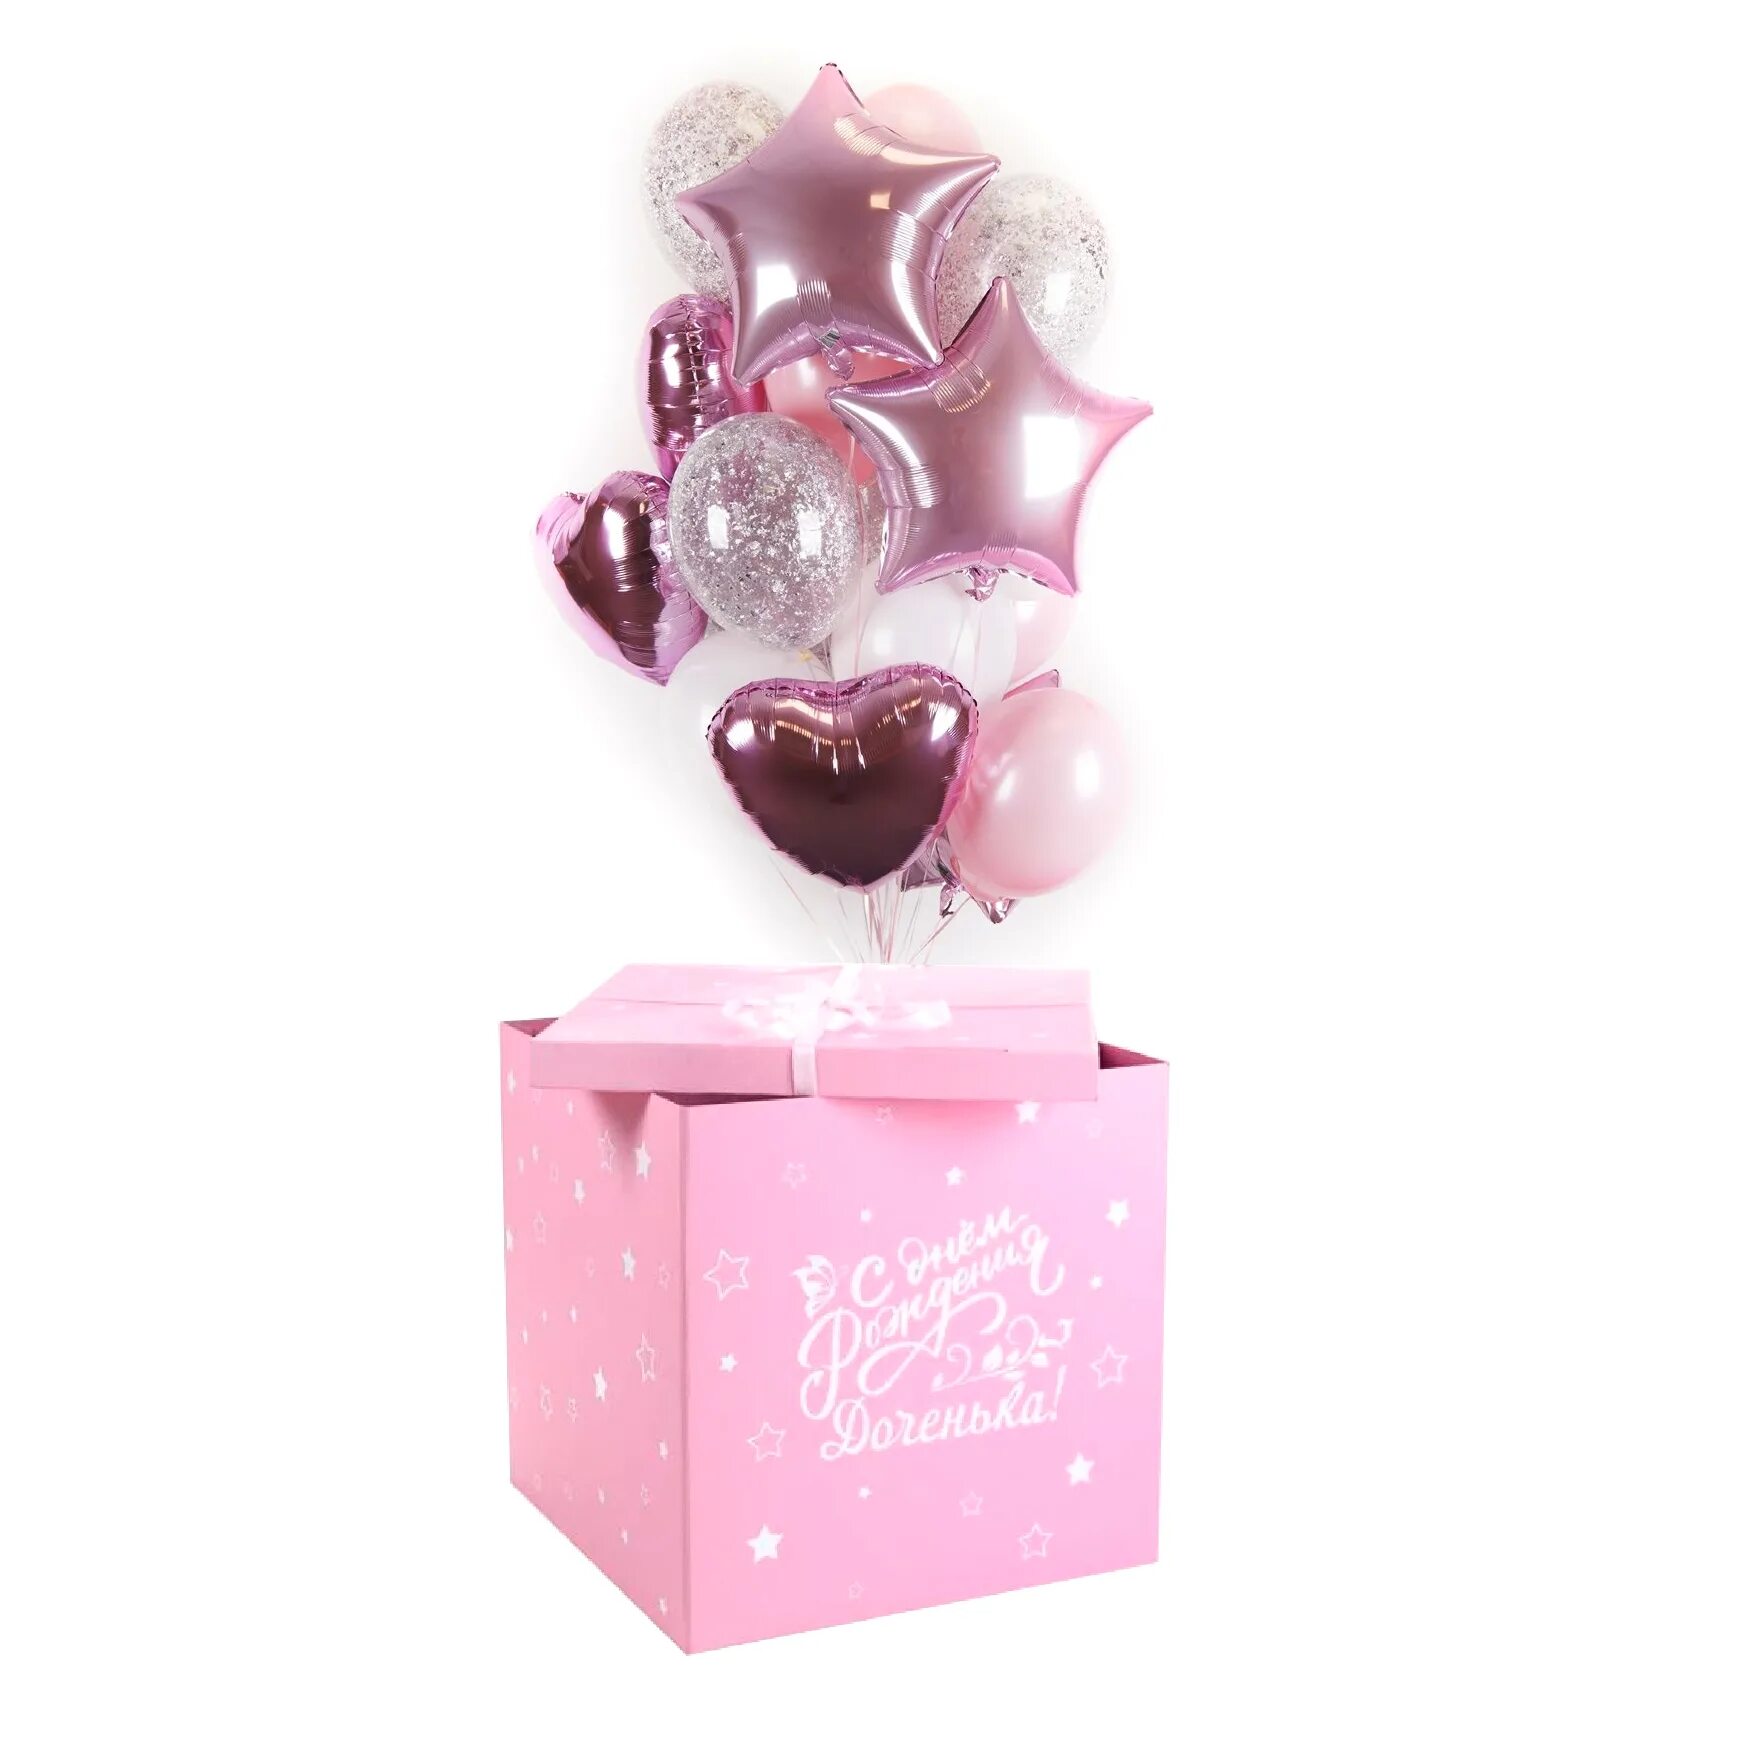 Коробка шаров москва. Коробка с шарами. Коробка с шарами для девочки. Коробка сюрприз с шарами для девочки. Розовая коробка сюрприз с шарами.